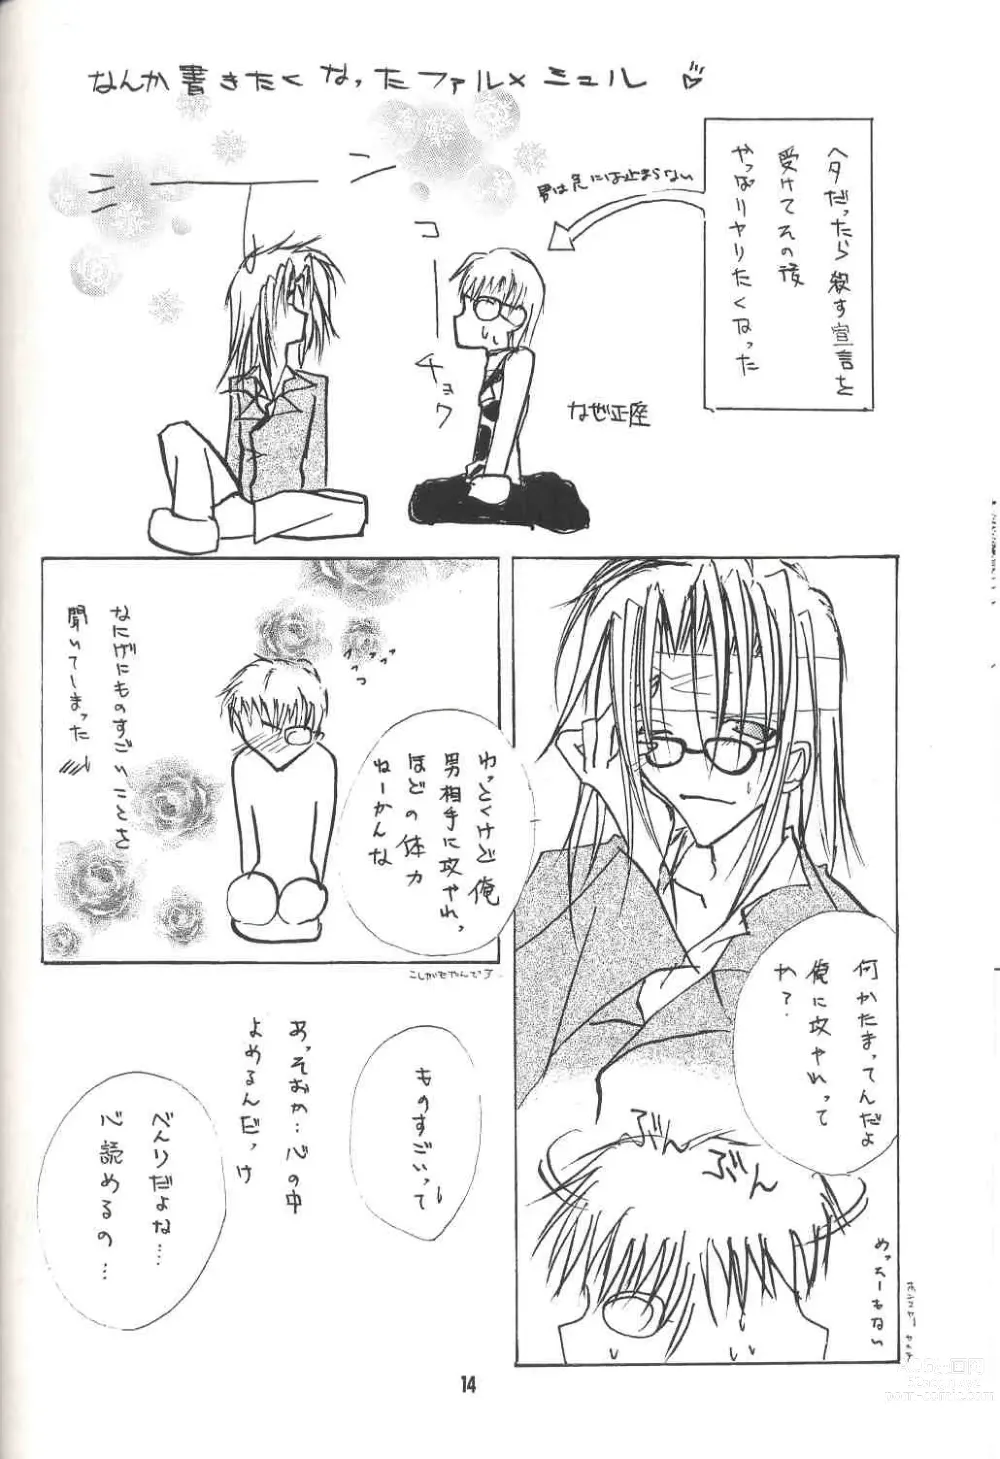 Page 13 of doujinshi Sentimental